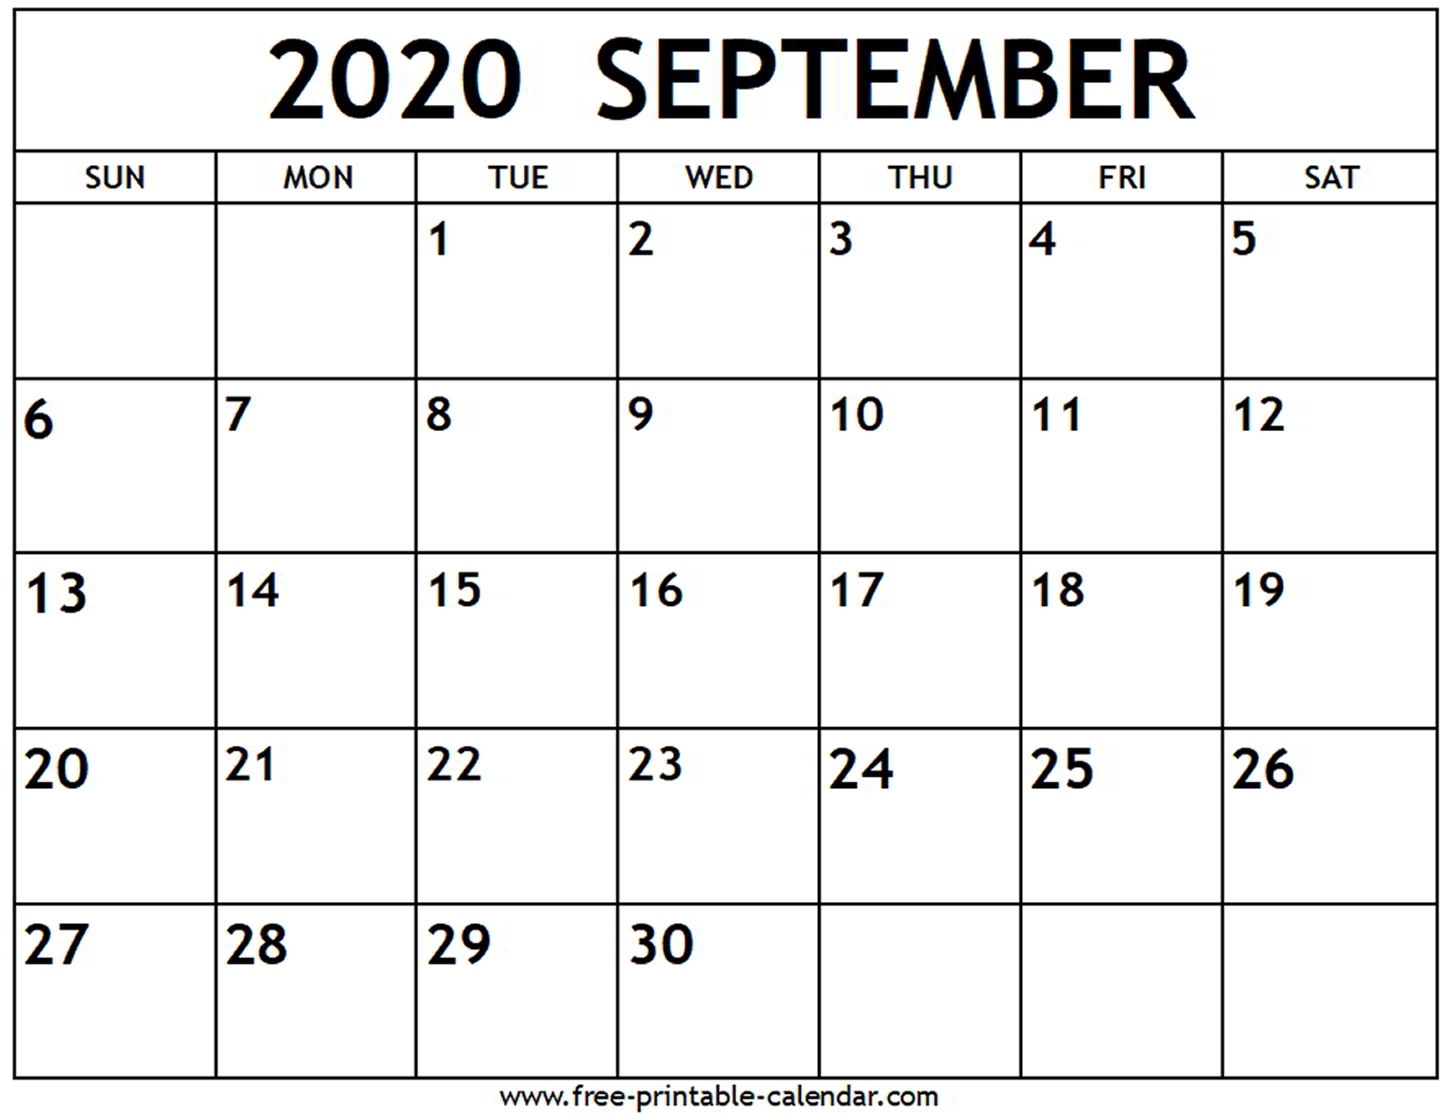 September 2020 Calendar - Free-Printable-Calendar